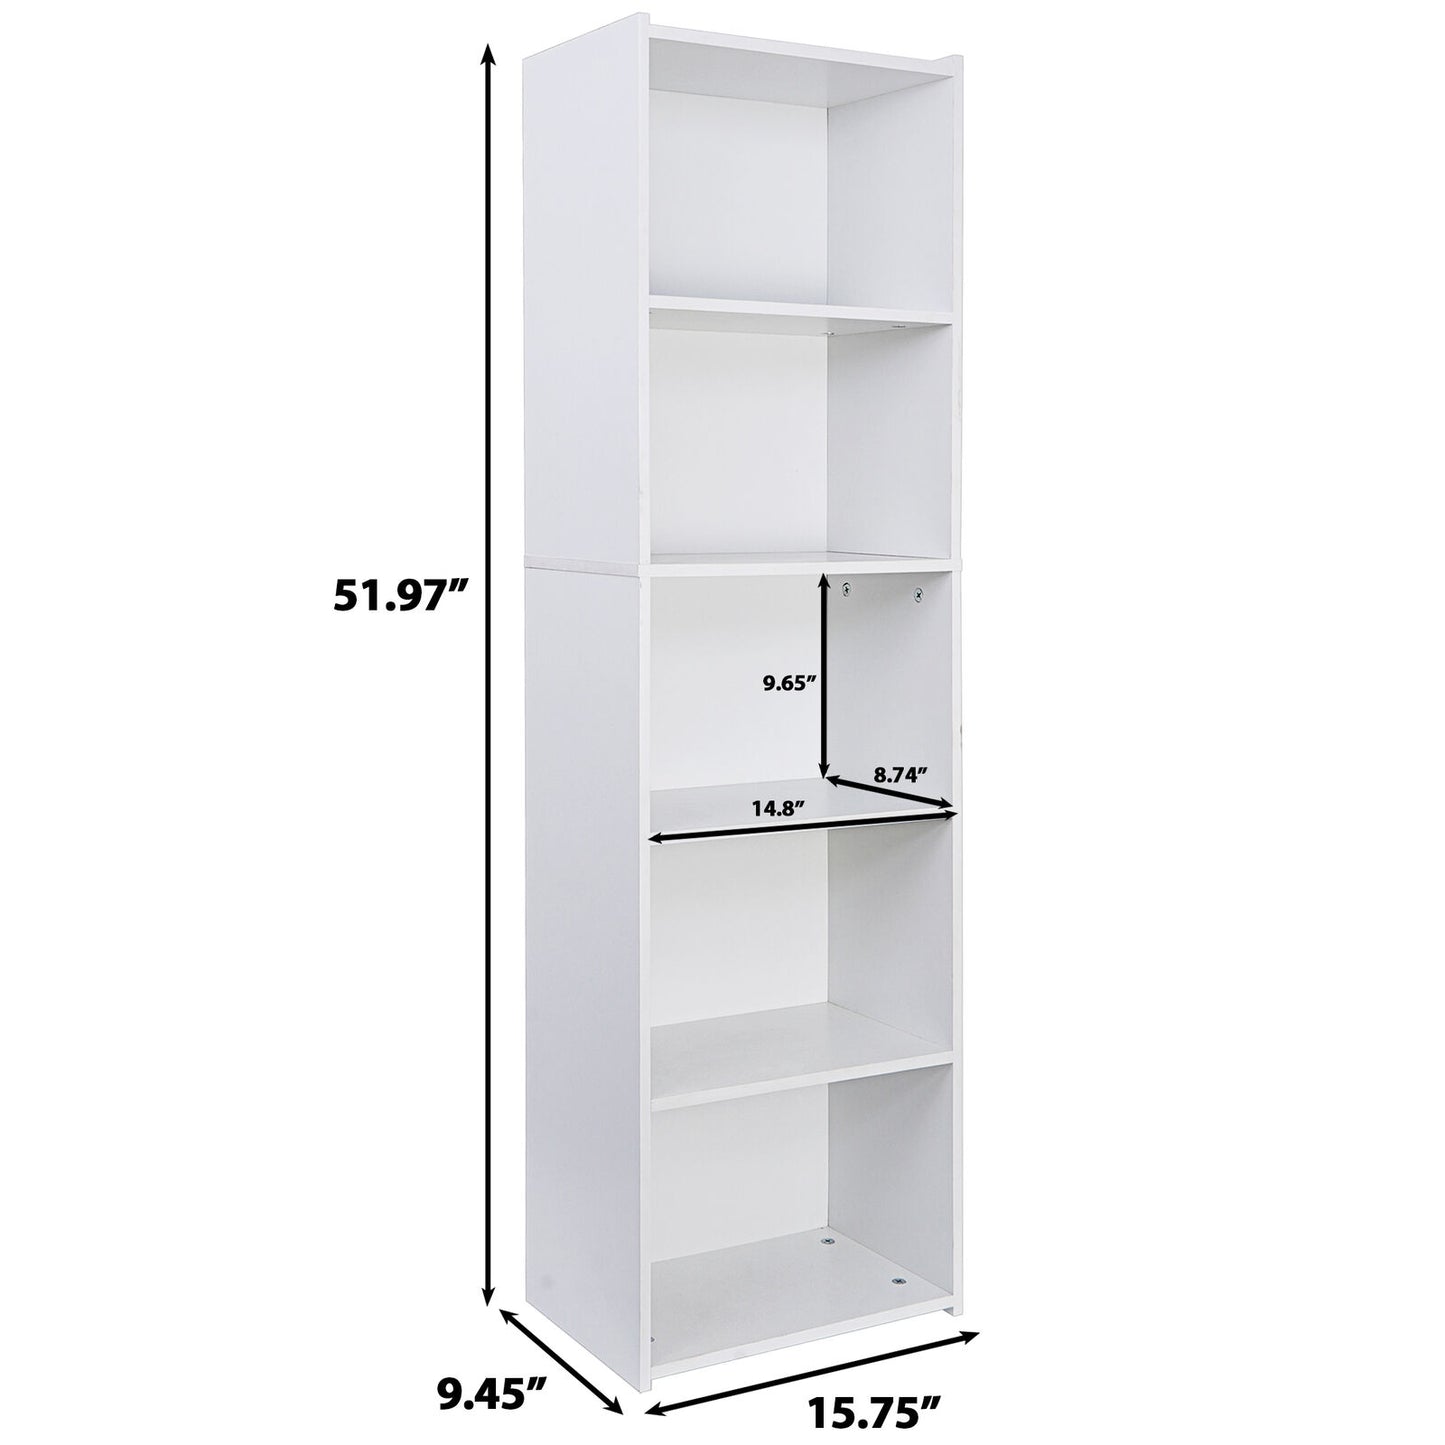 5 Tier Bookcase Bookshelf Storage Wall Shelf Organizer Unit Display Stand Home